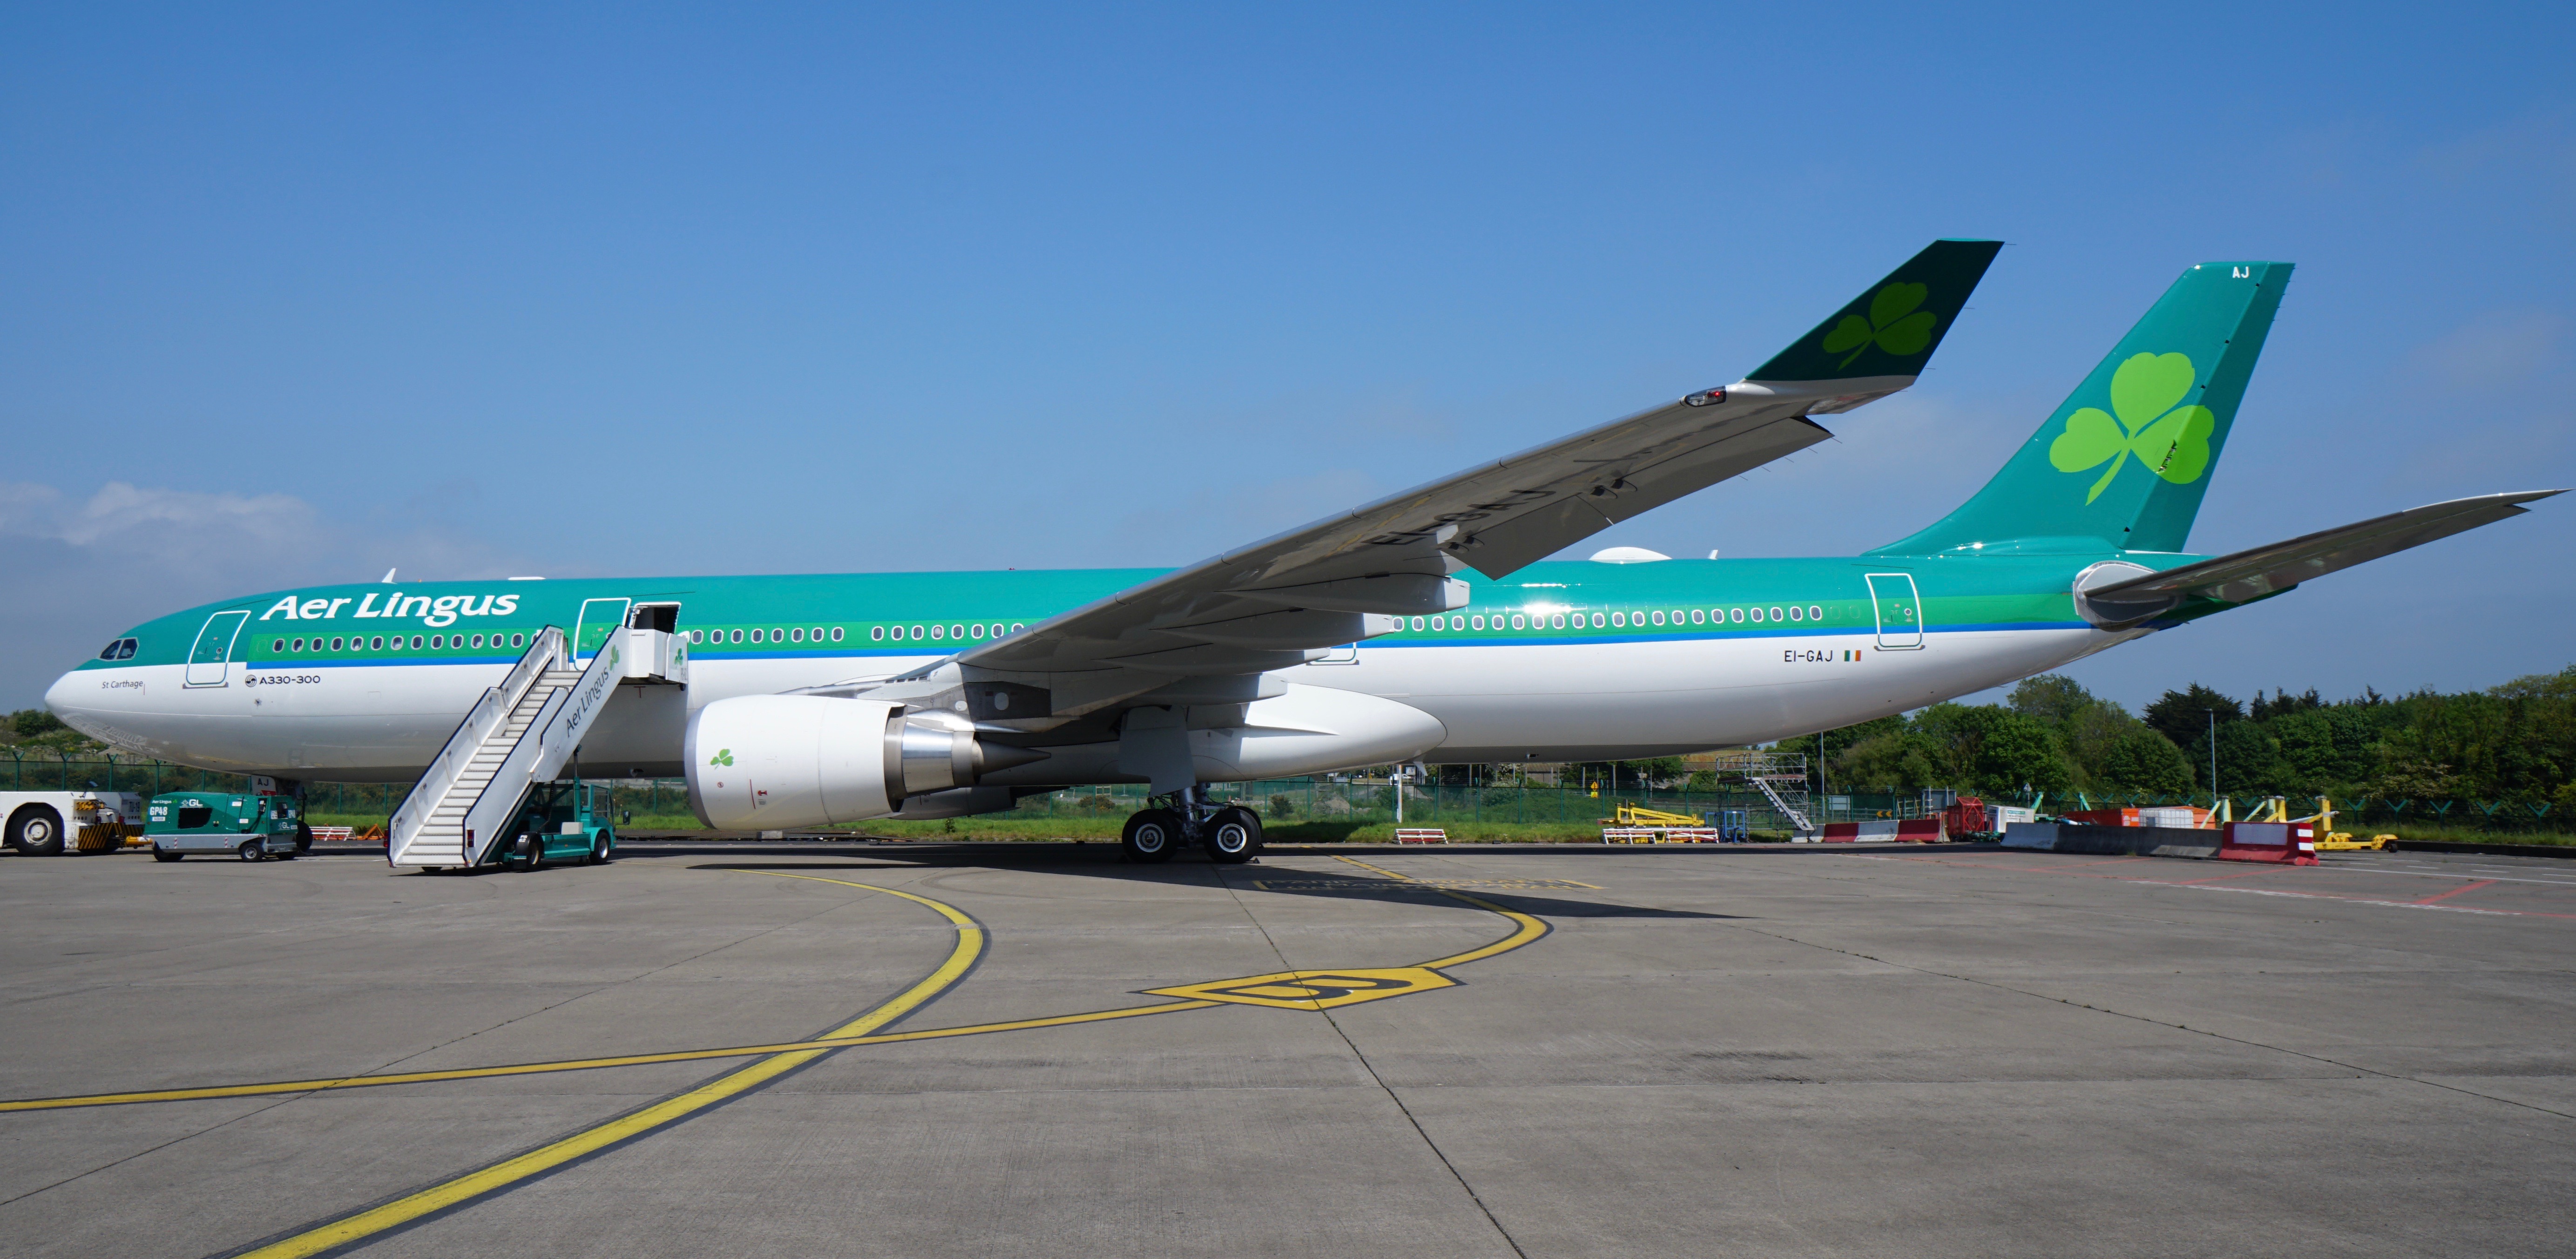 Aer Lingus Launches Transatlantic Autumn Sale Fares